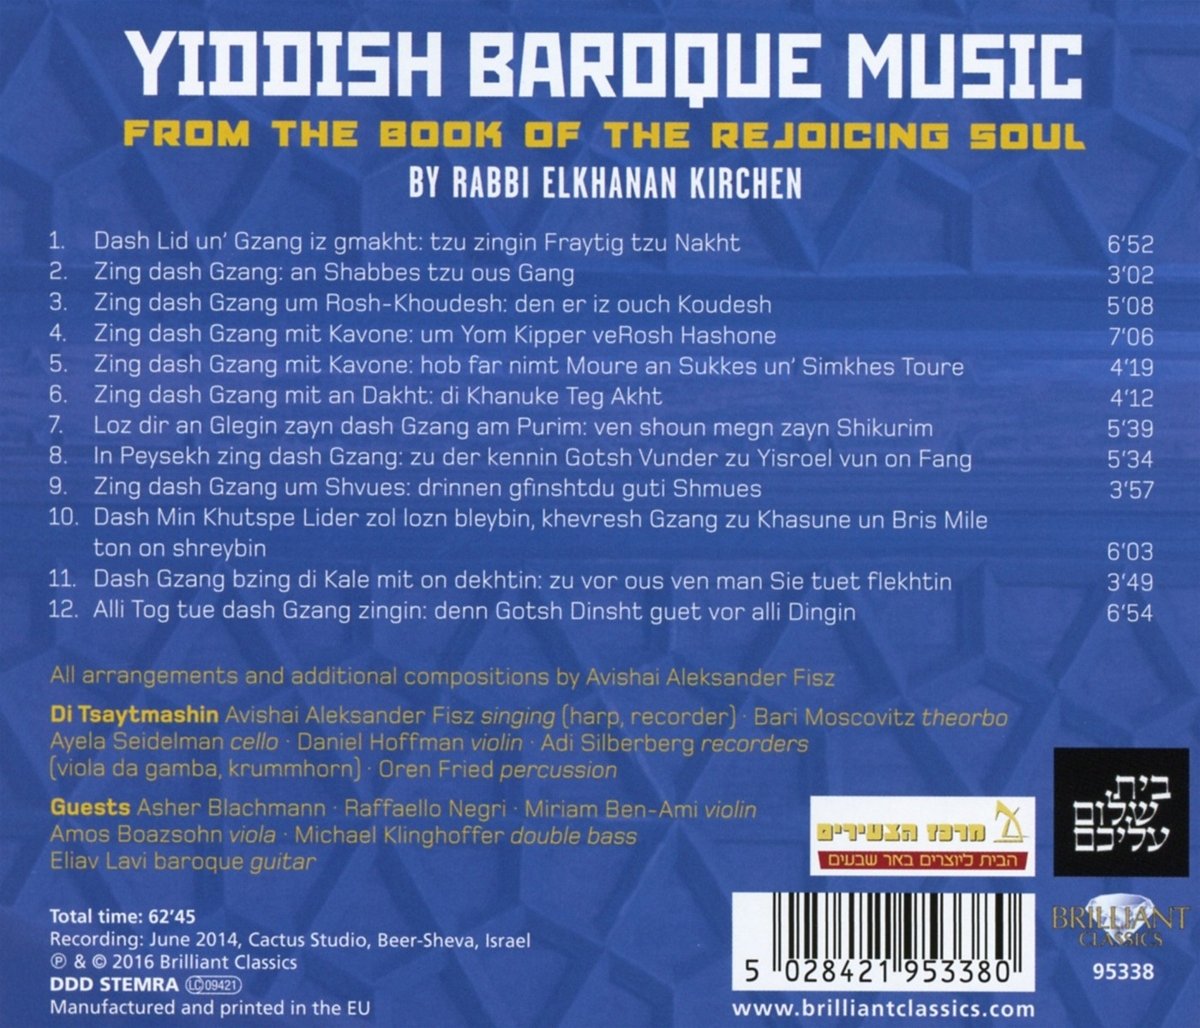 Yiddish Baroque Music by Rabbi Elkhanan Kirchen - slide-1